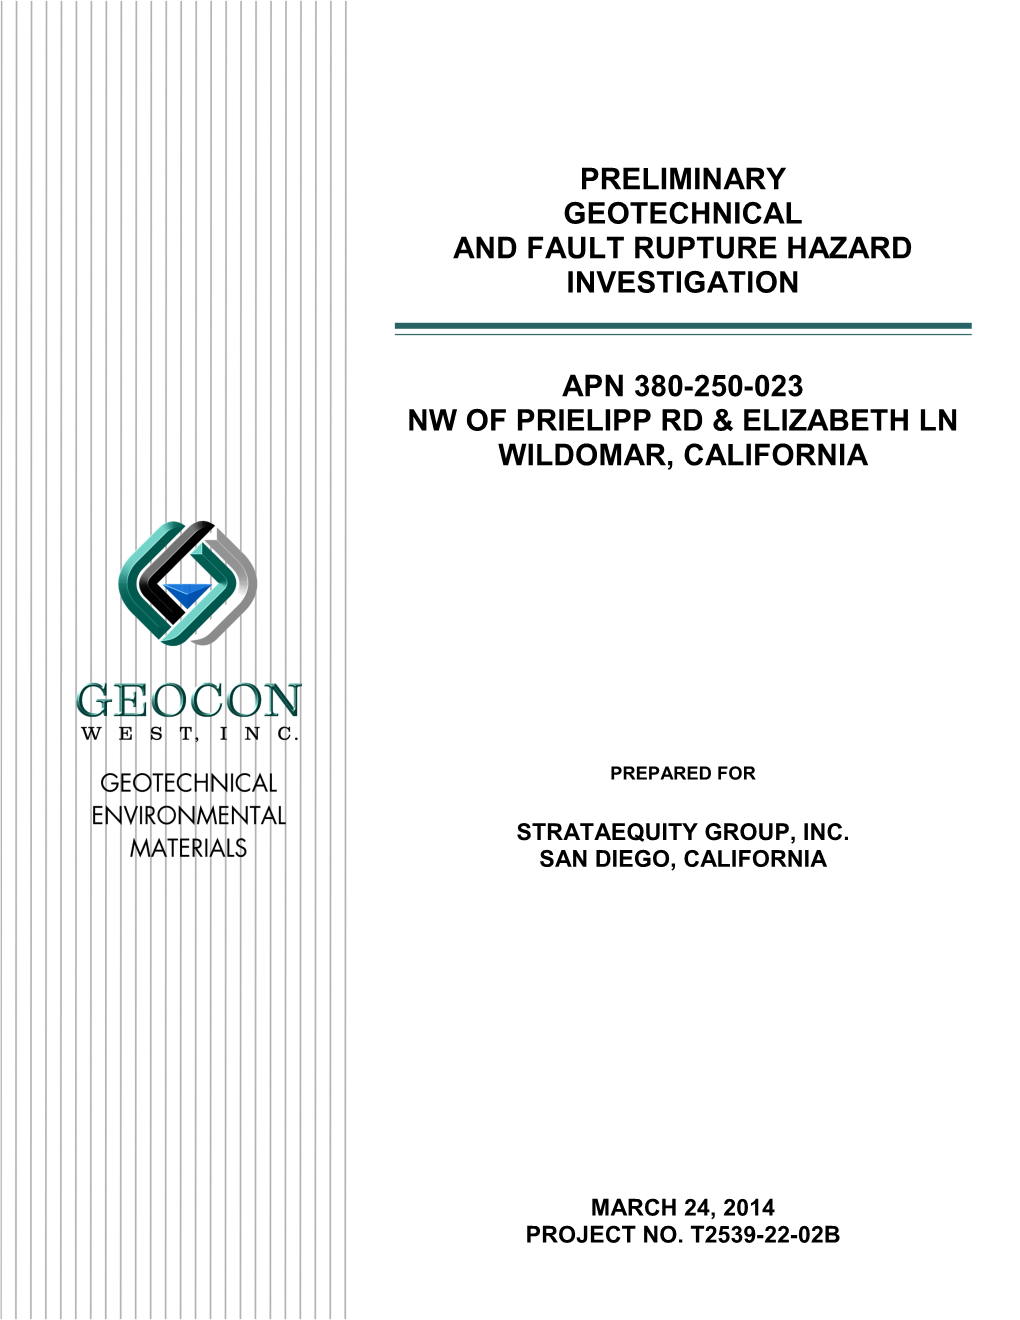 Preliminary Geotechnical and Fault Rupture Hazard Investigation Apn 380-250-023 Nw of Prielipp Rd & Elizabeth Ln Wildomar, California